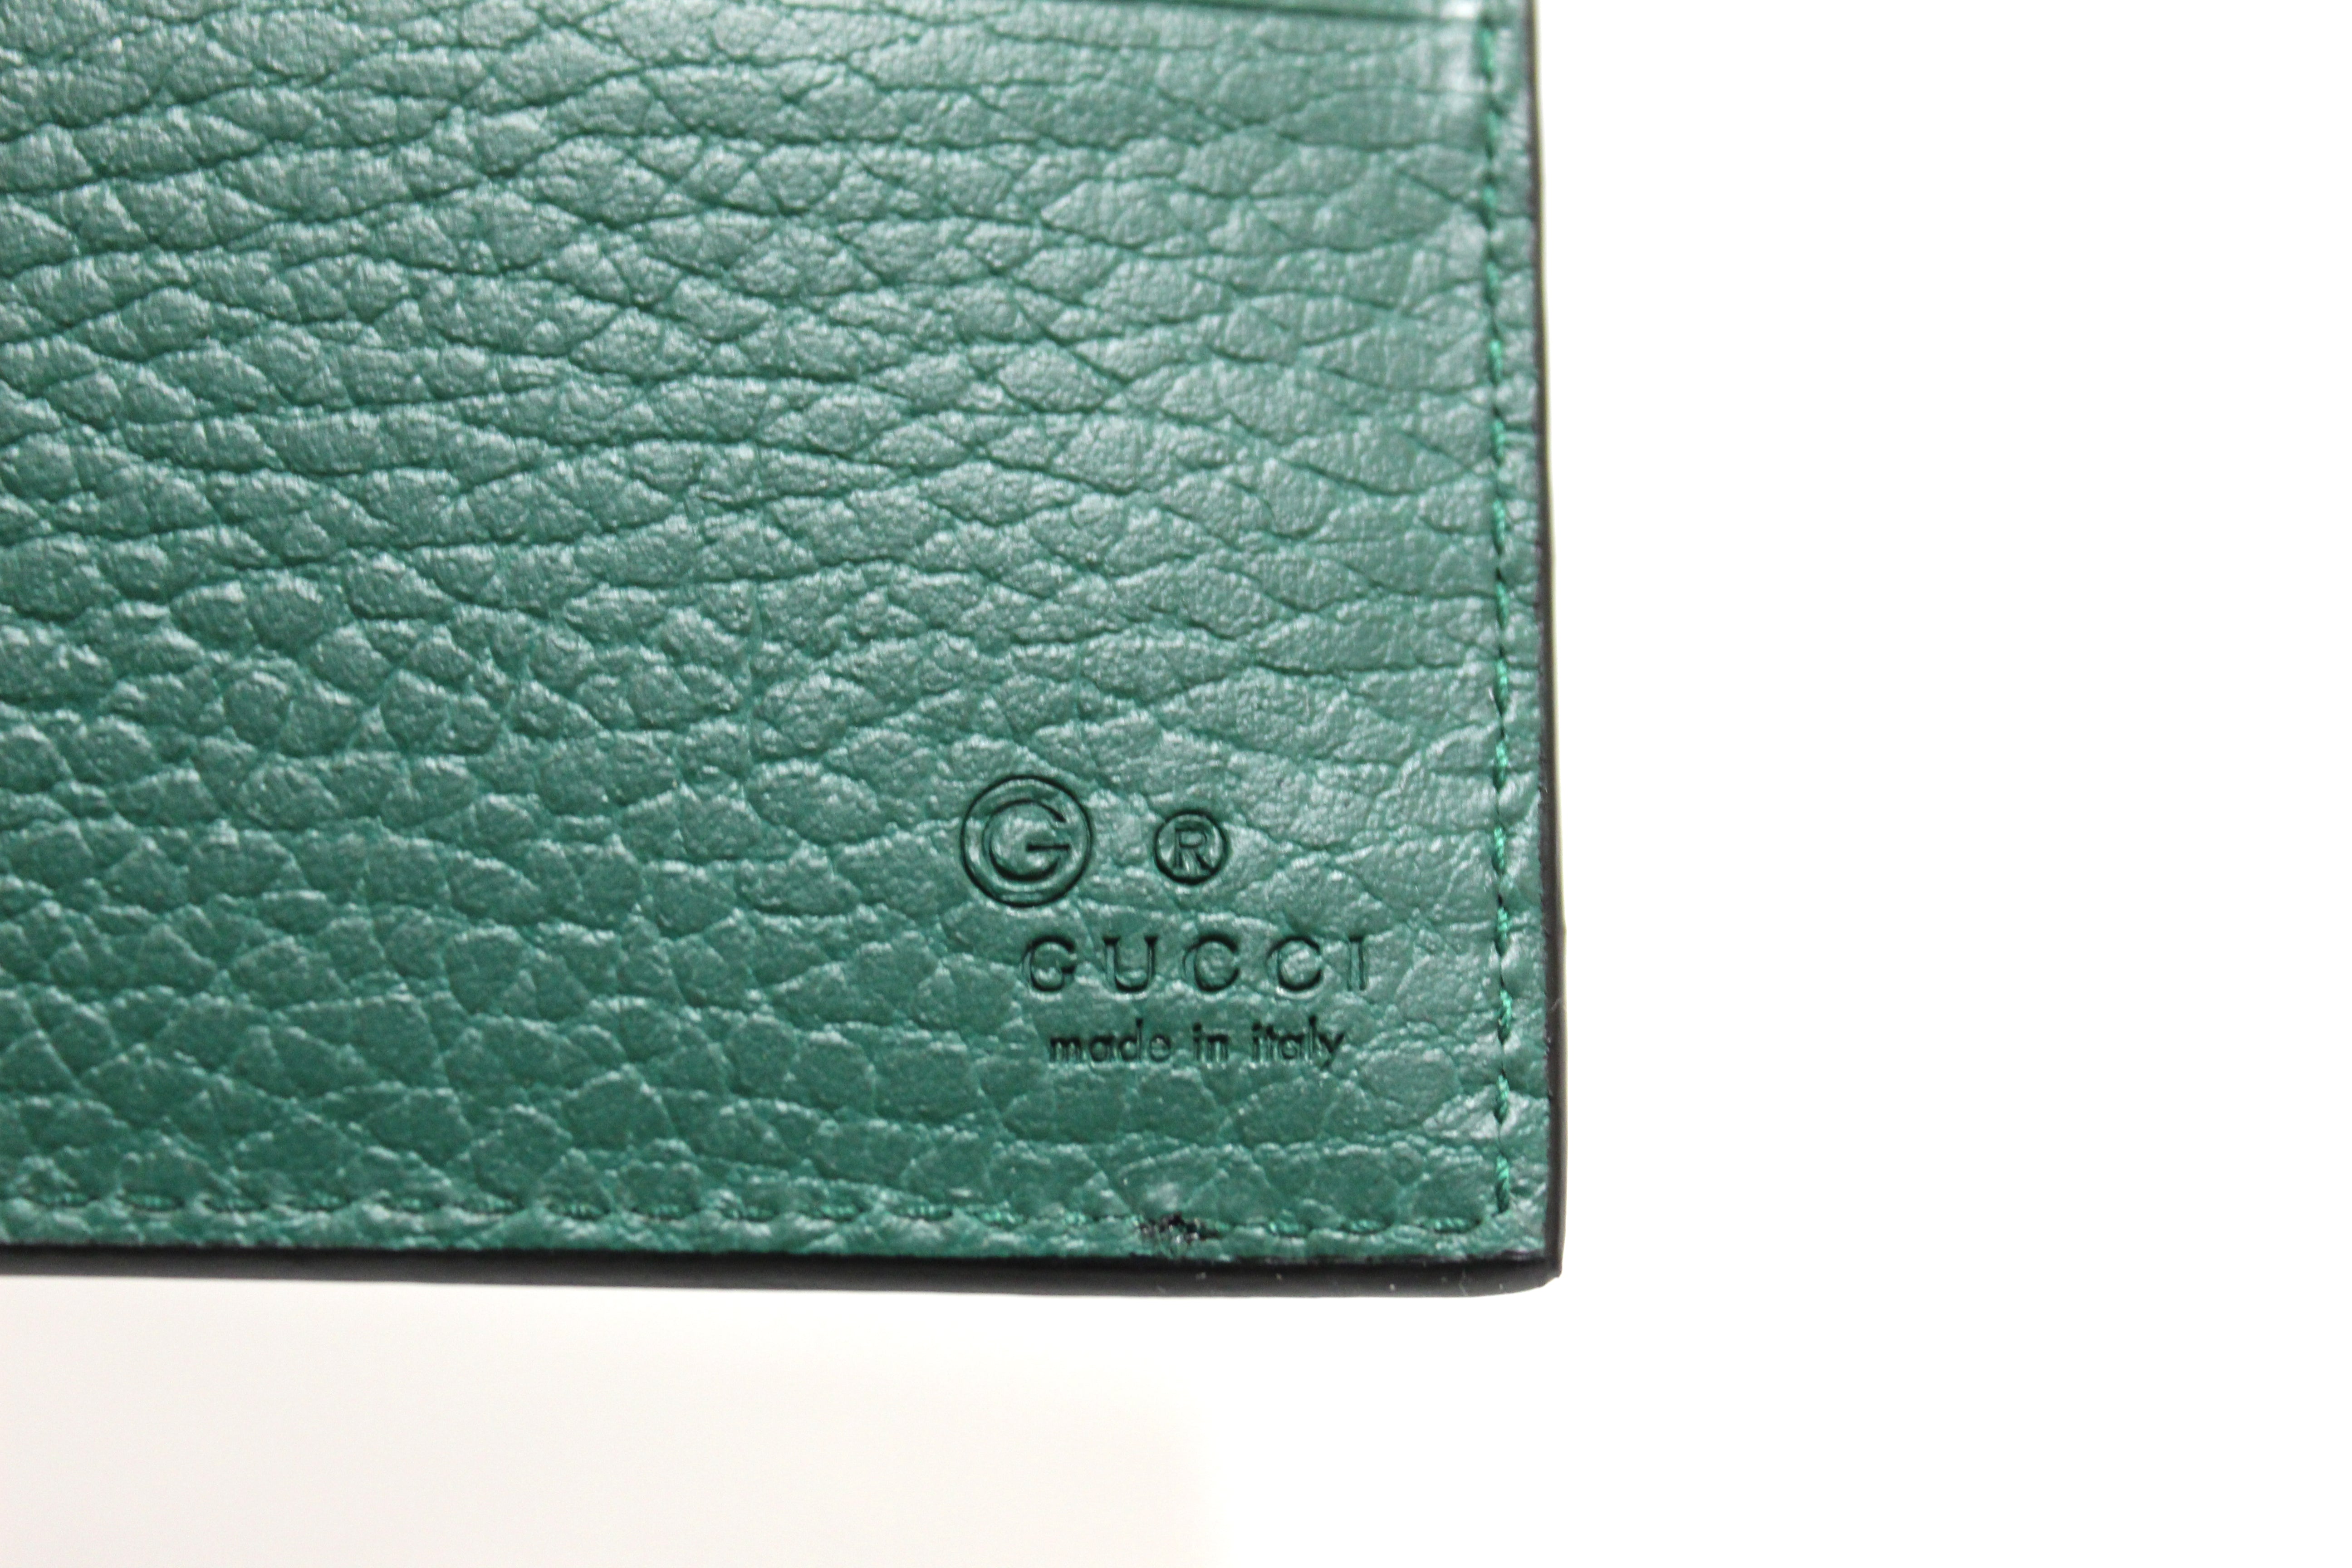 Gucci NIB Black Green Bifold Wallet - Vintage Lux